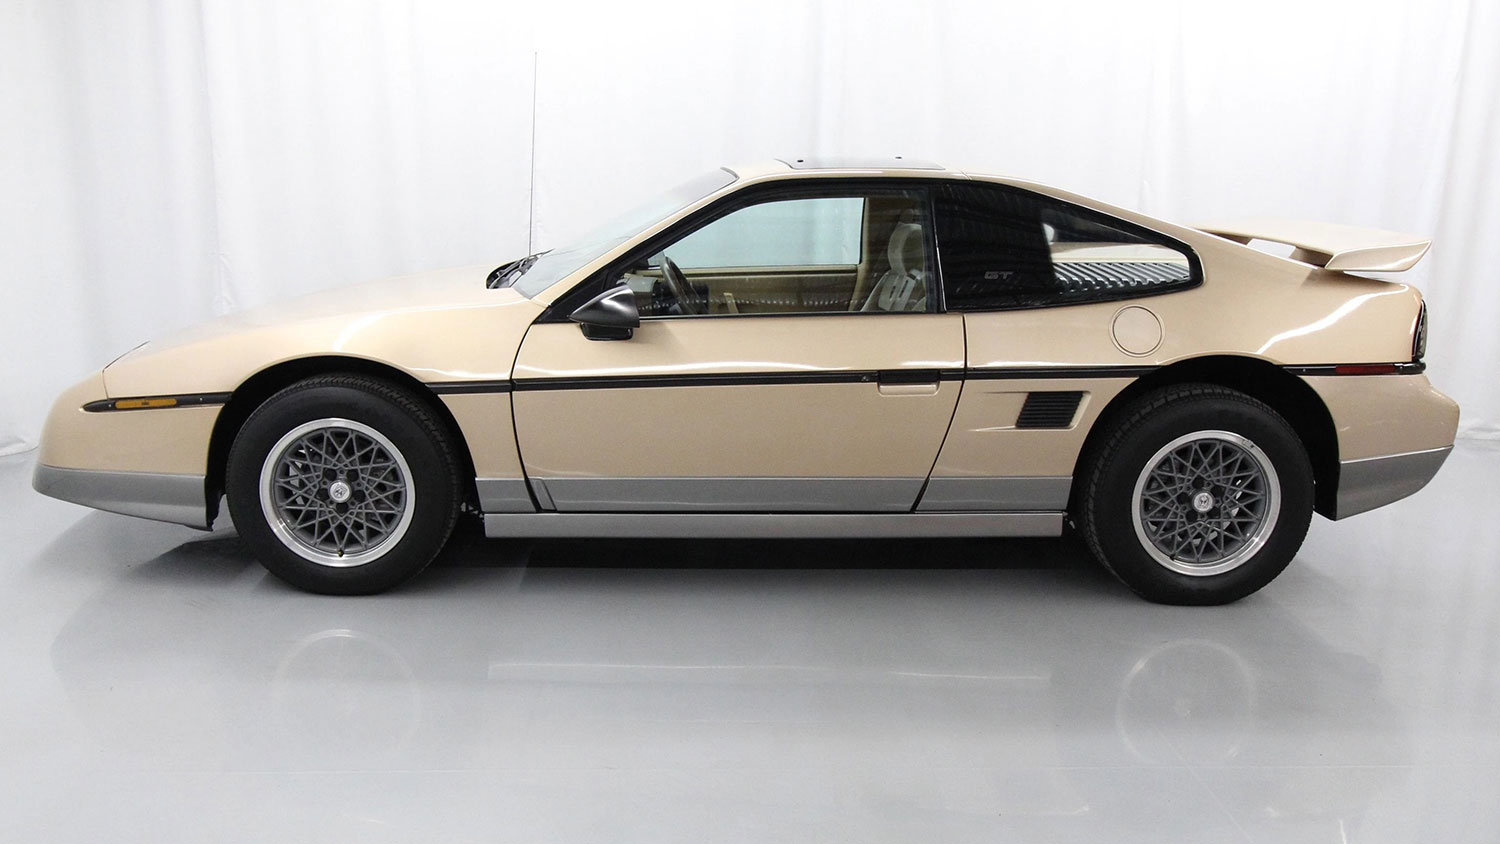 GM's original mid-engine sports car, much-improved, V6-powered Fiero GT